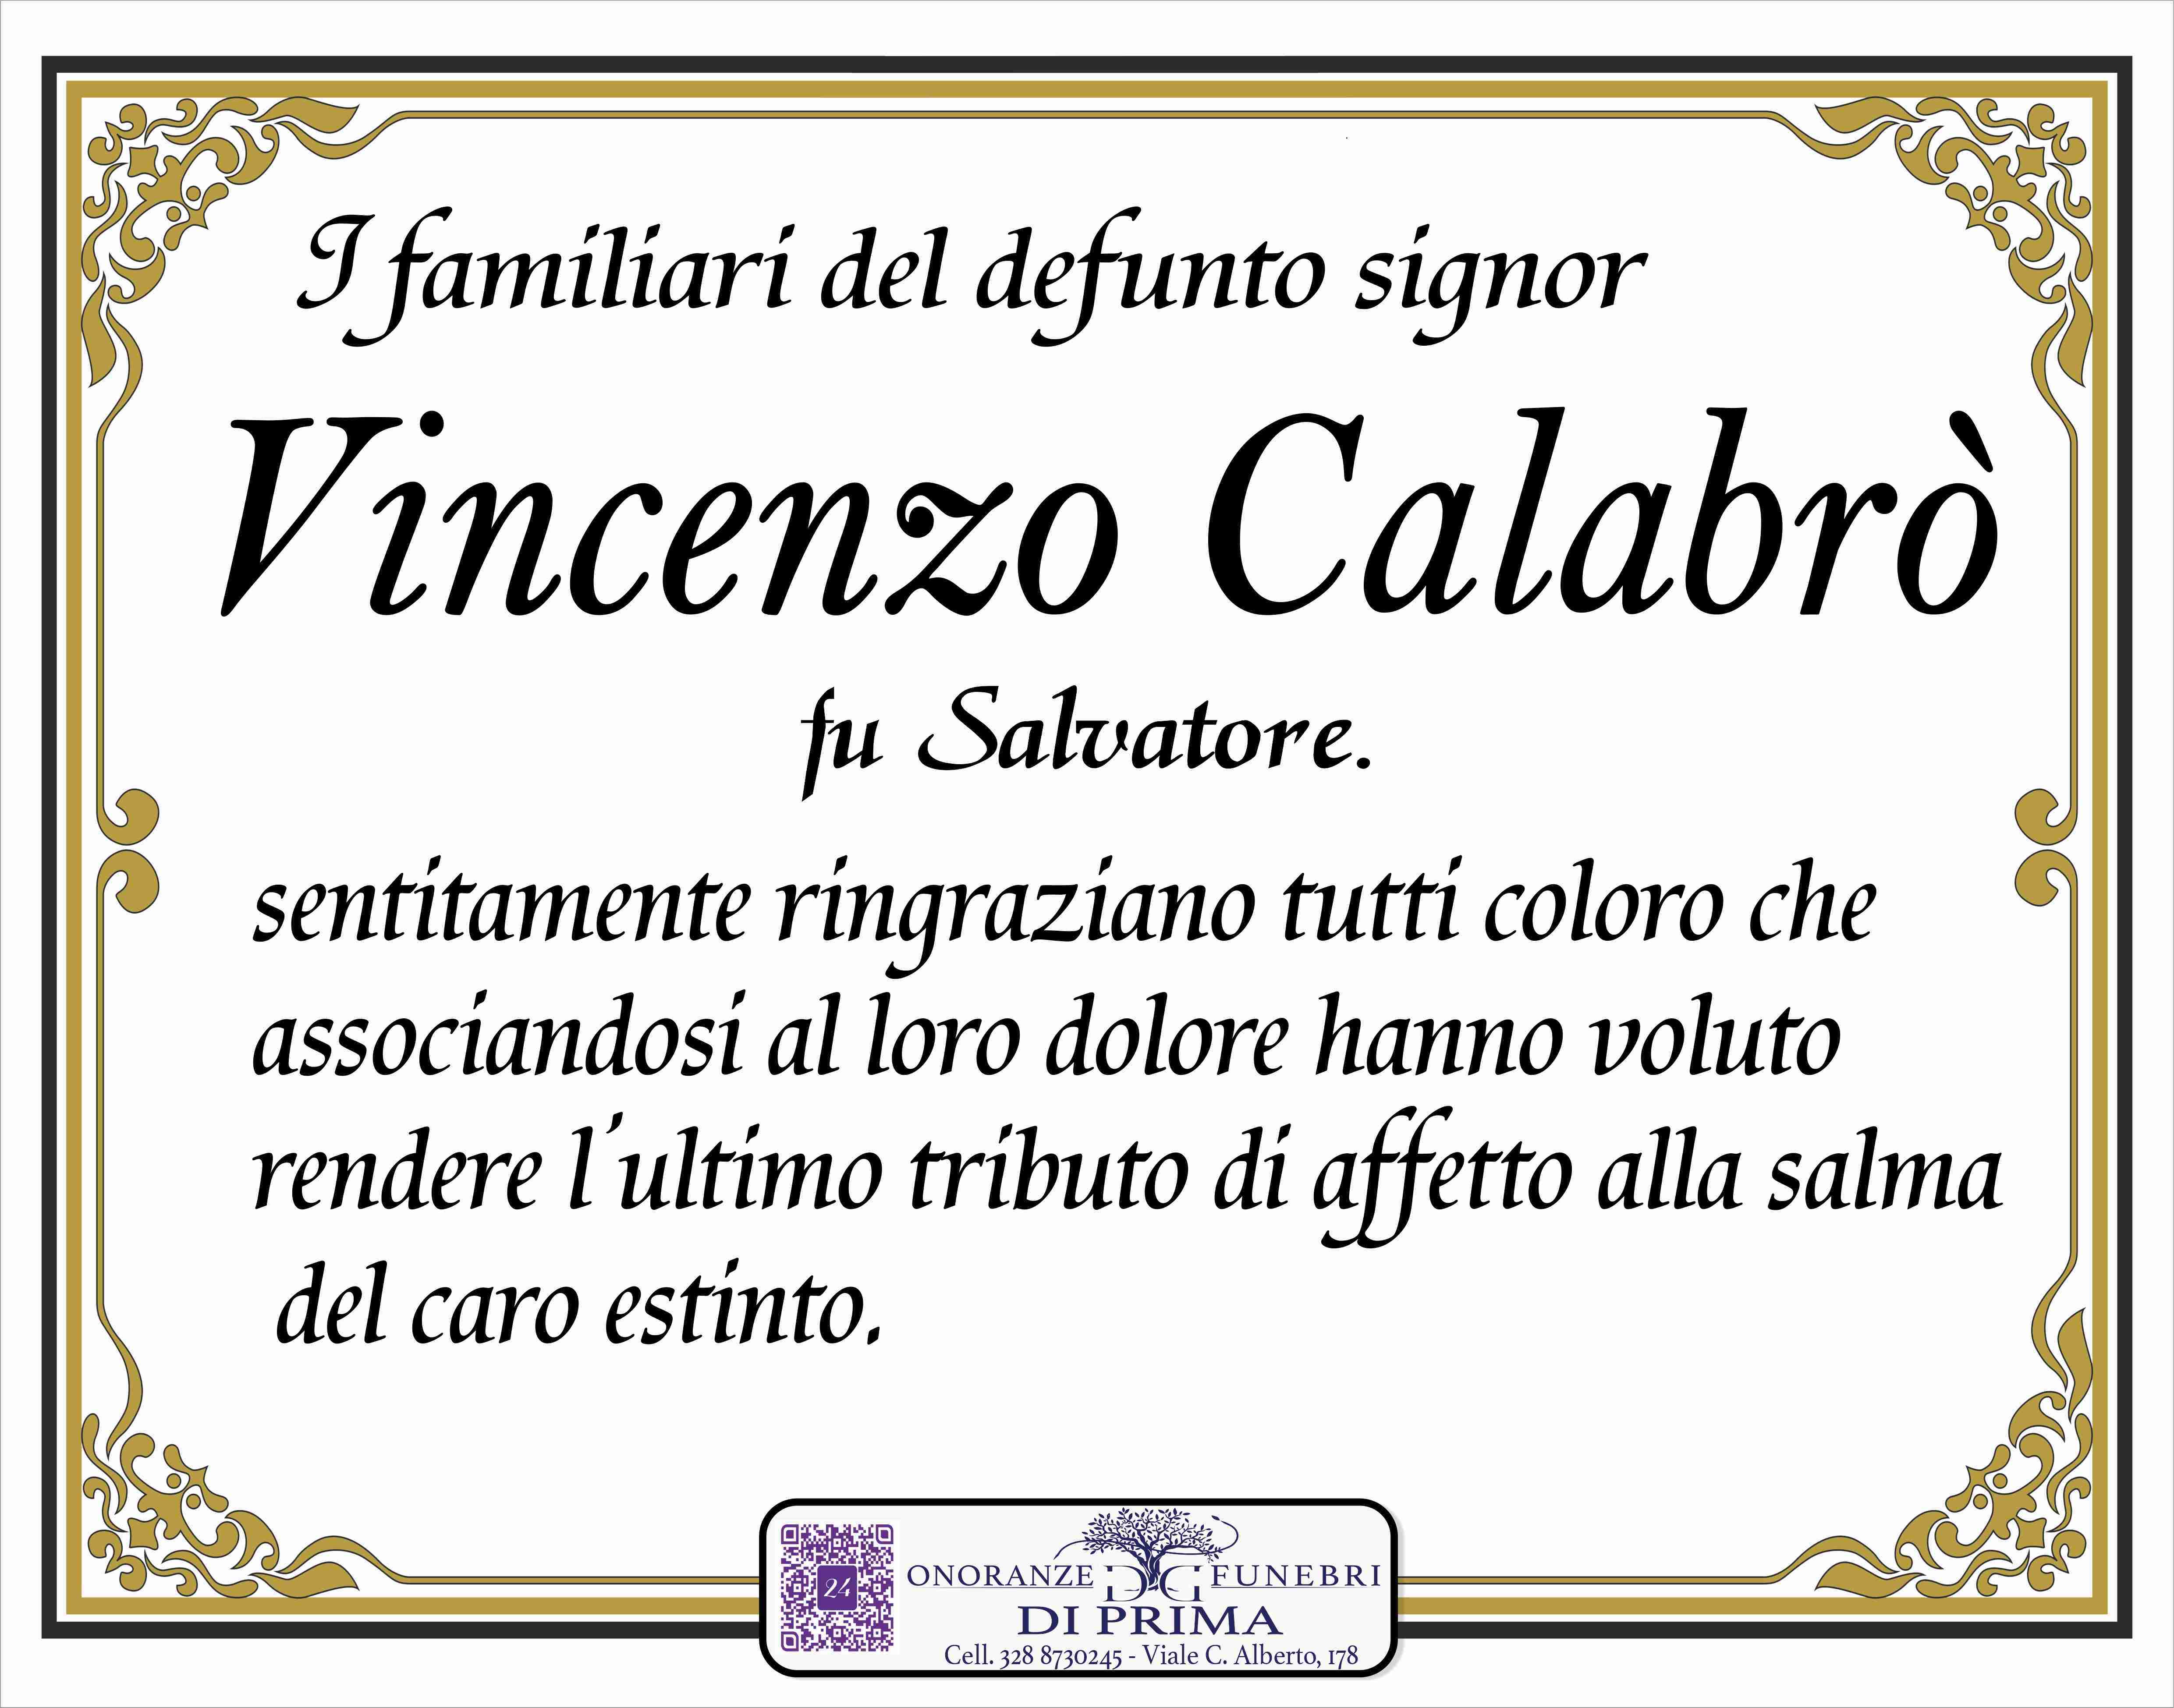 Vincenzo Calabrò